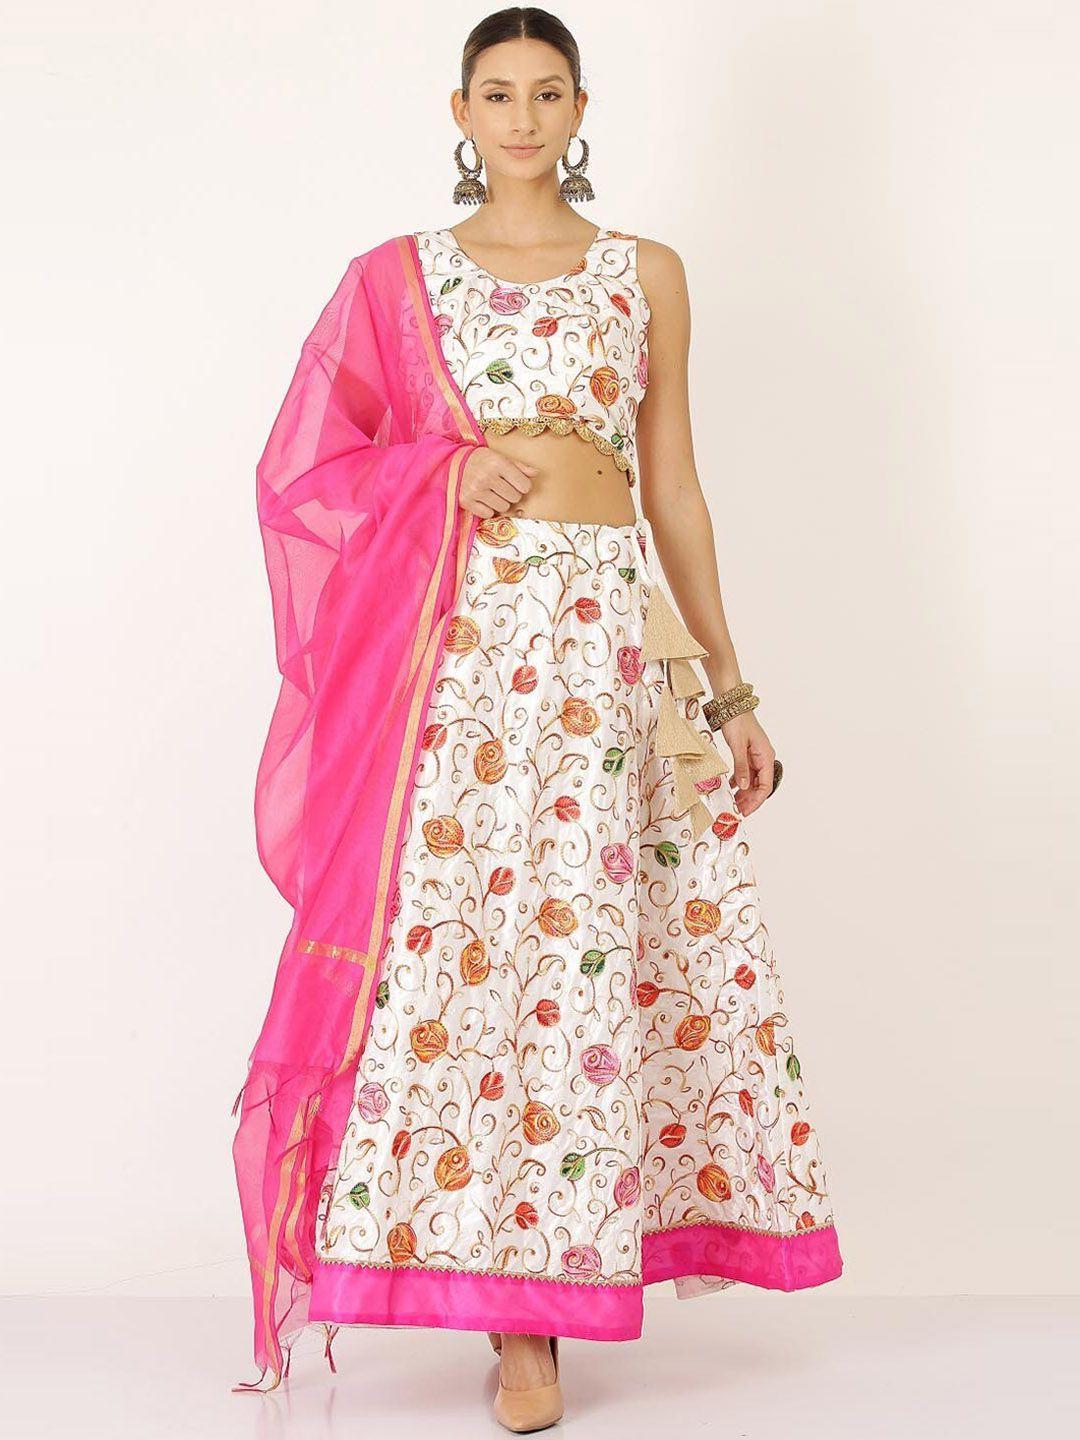 kaanchie nanggia white & pink embroidered thread work ready to wear lehenga & blouse with dupatta